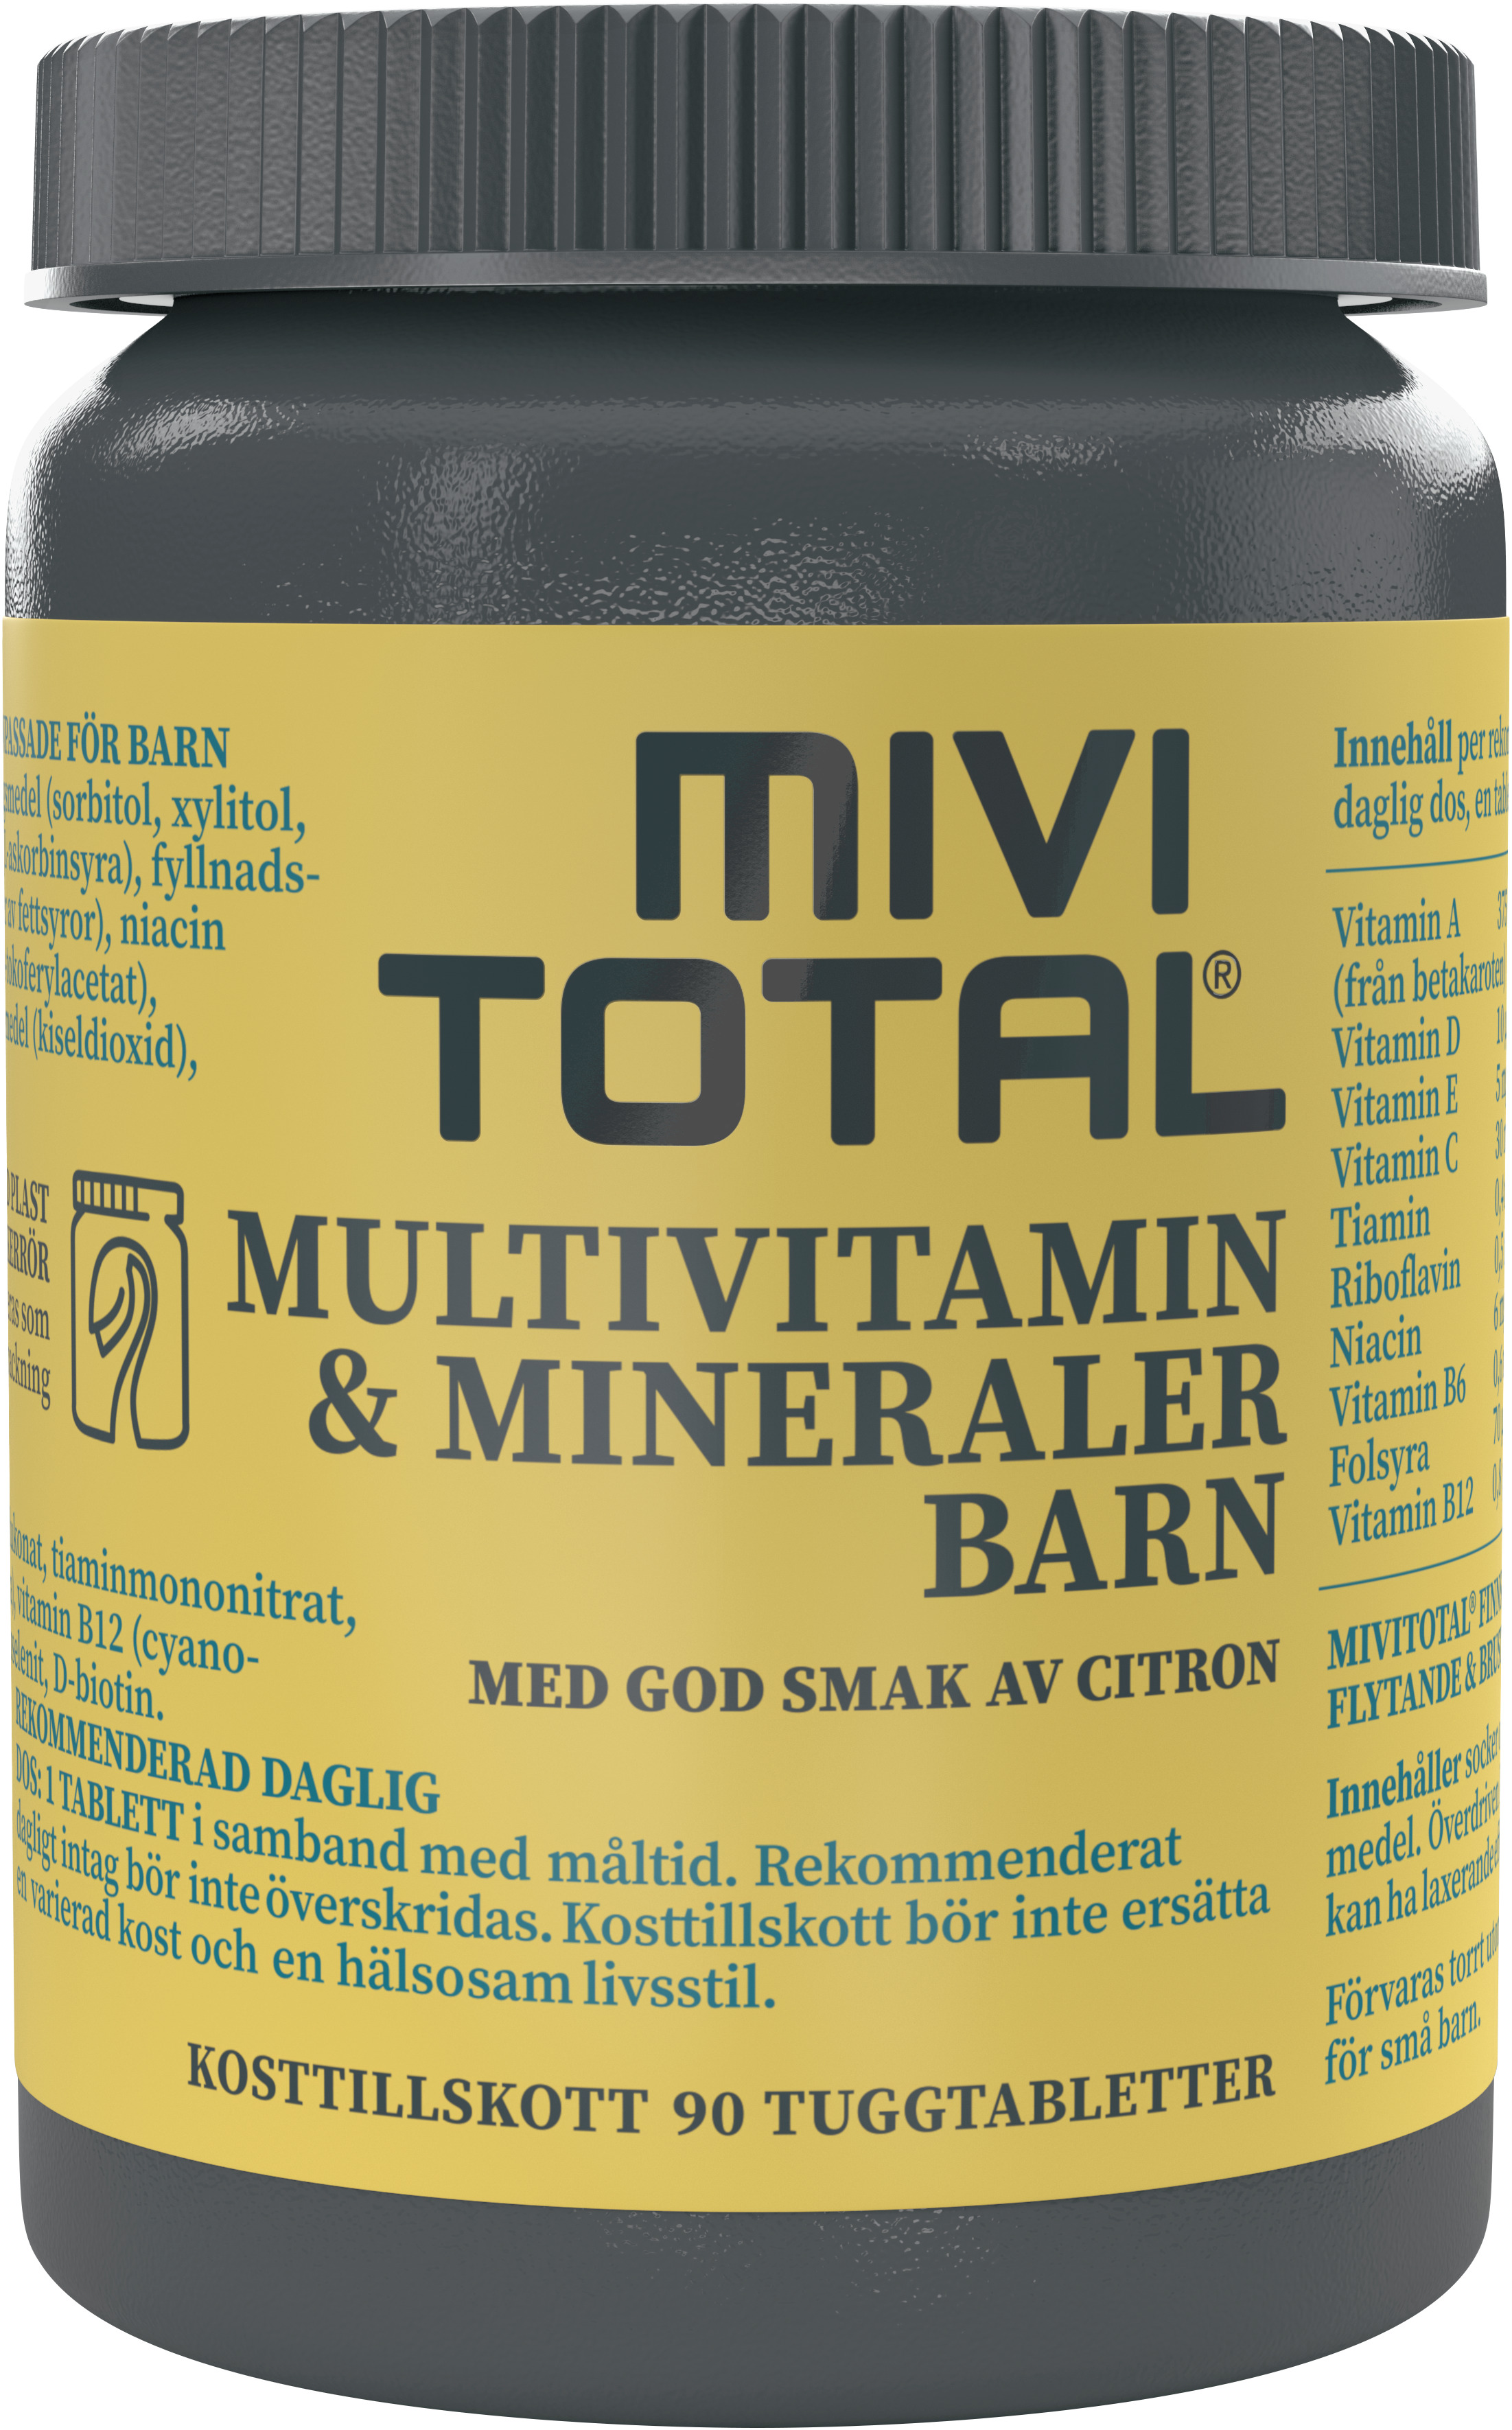 Mivitotal Multivitamin Barn Citron 90 tuggtabletter